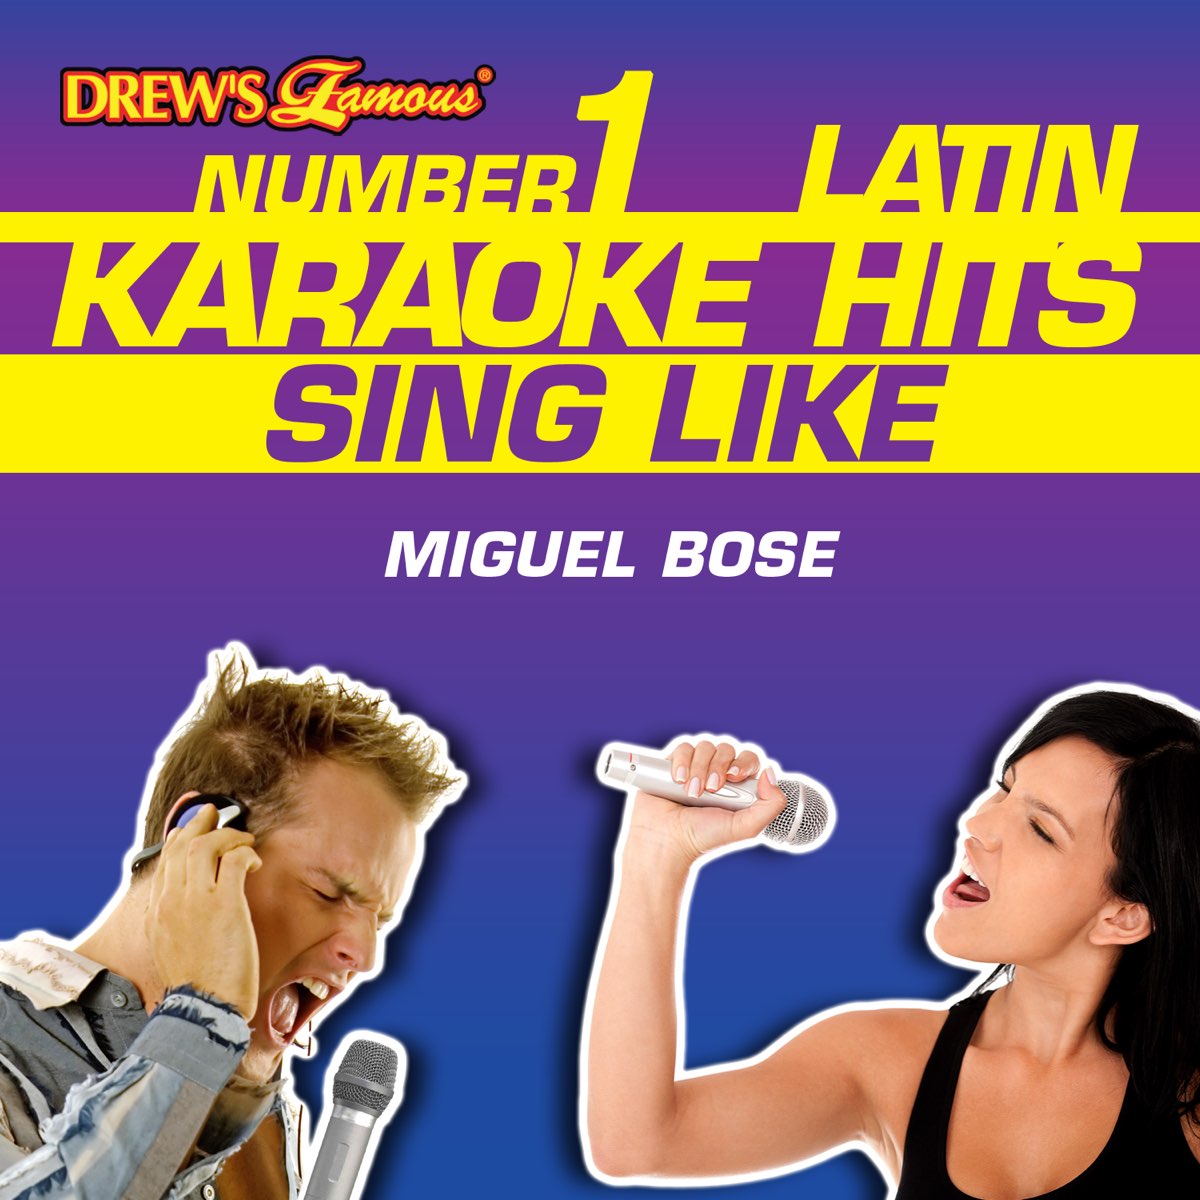 Depresión Vinagre Intensivo Drew's Famous #1 Latin Karaoke Hits: Sing Like Miguel Bose by Reyes De  Cancion on Apple Music